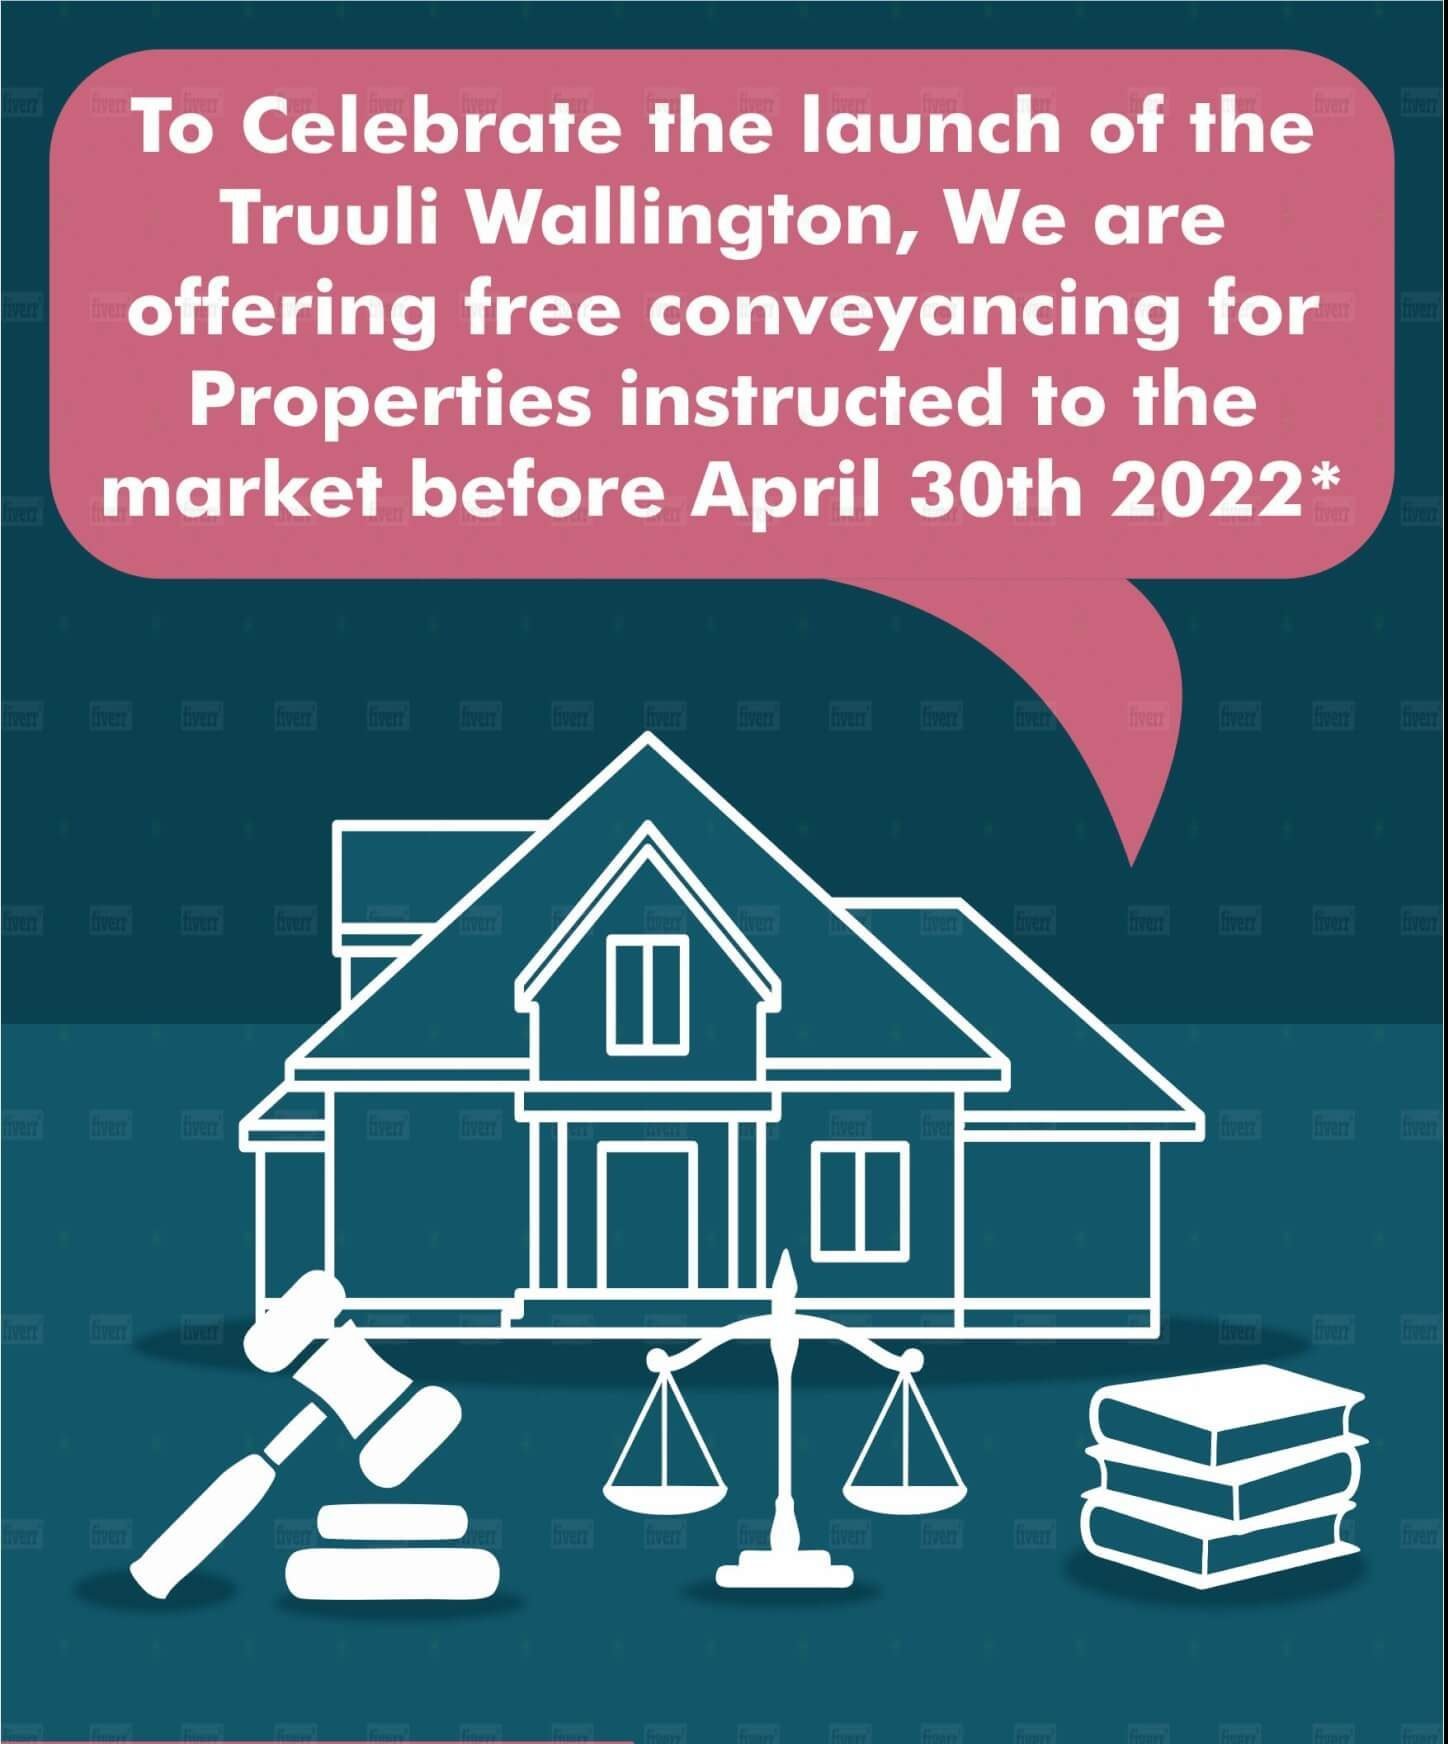 Free Conveyancing offer - Truuli Wallington